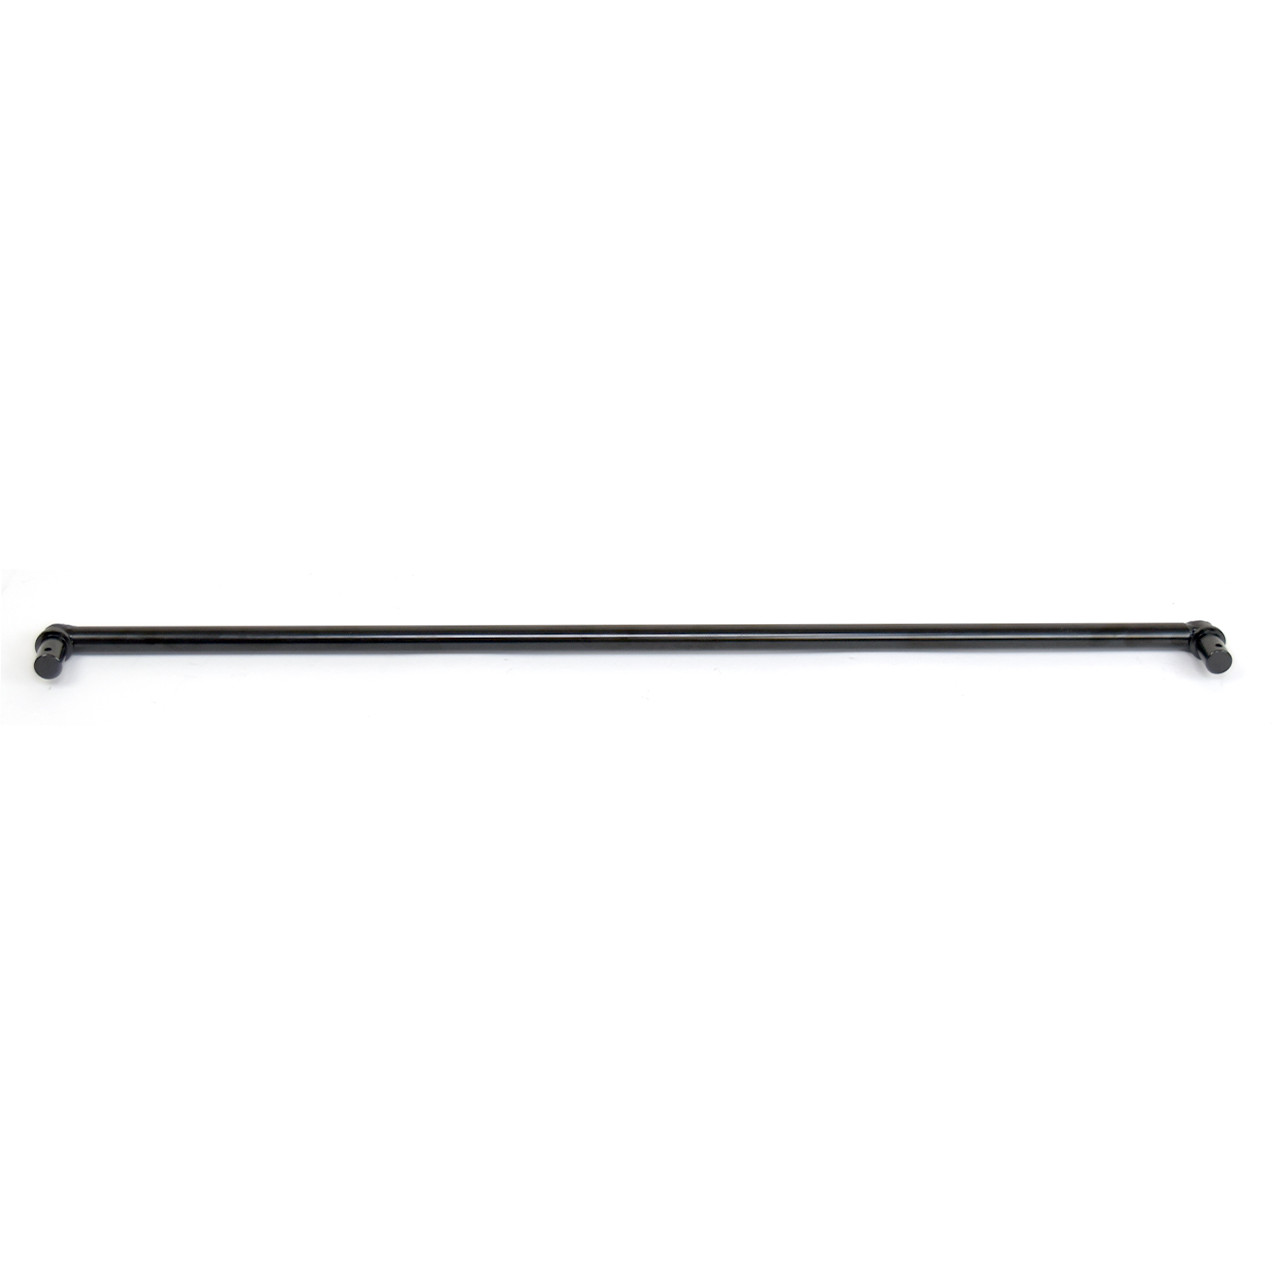 Clutch Upper Push Rod Pedal to Equalizer Bar 18.2" Long, 7/16" Diameter [FP-EC077]